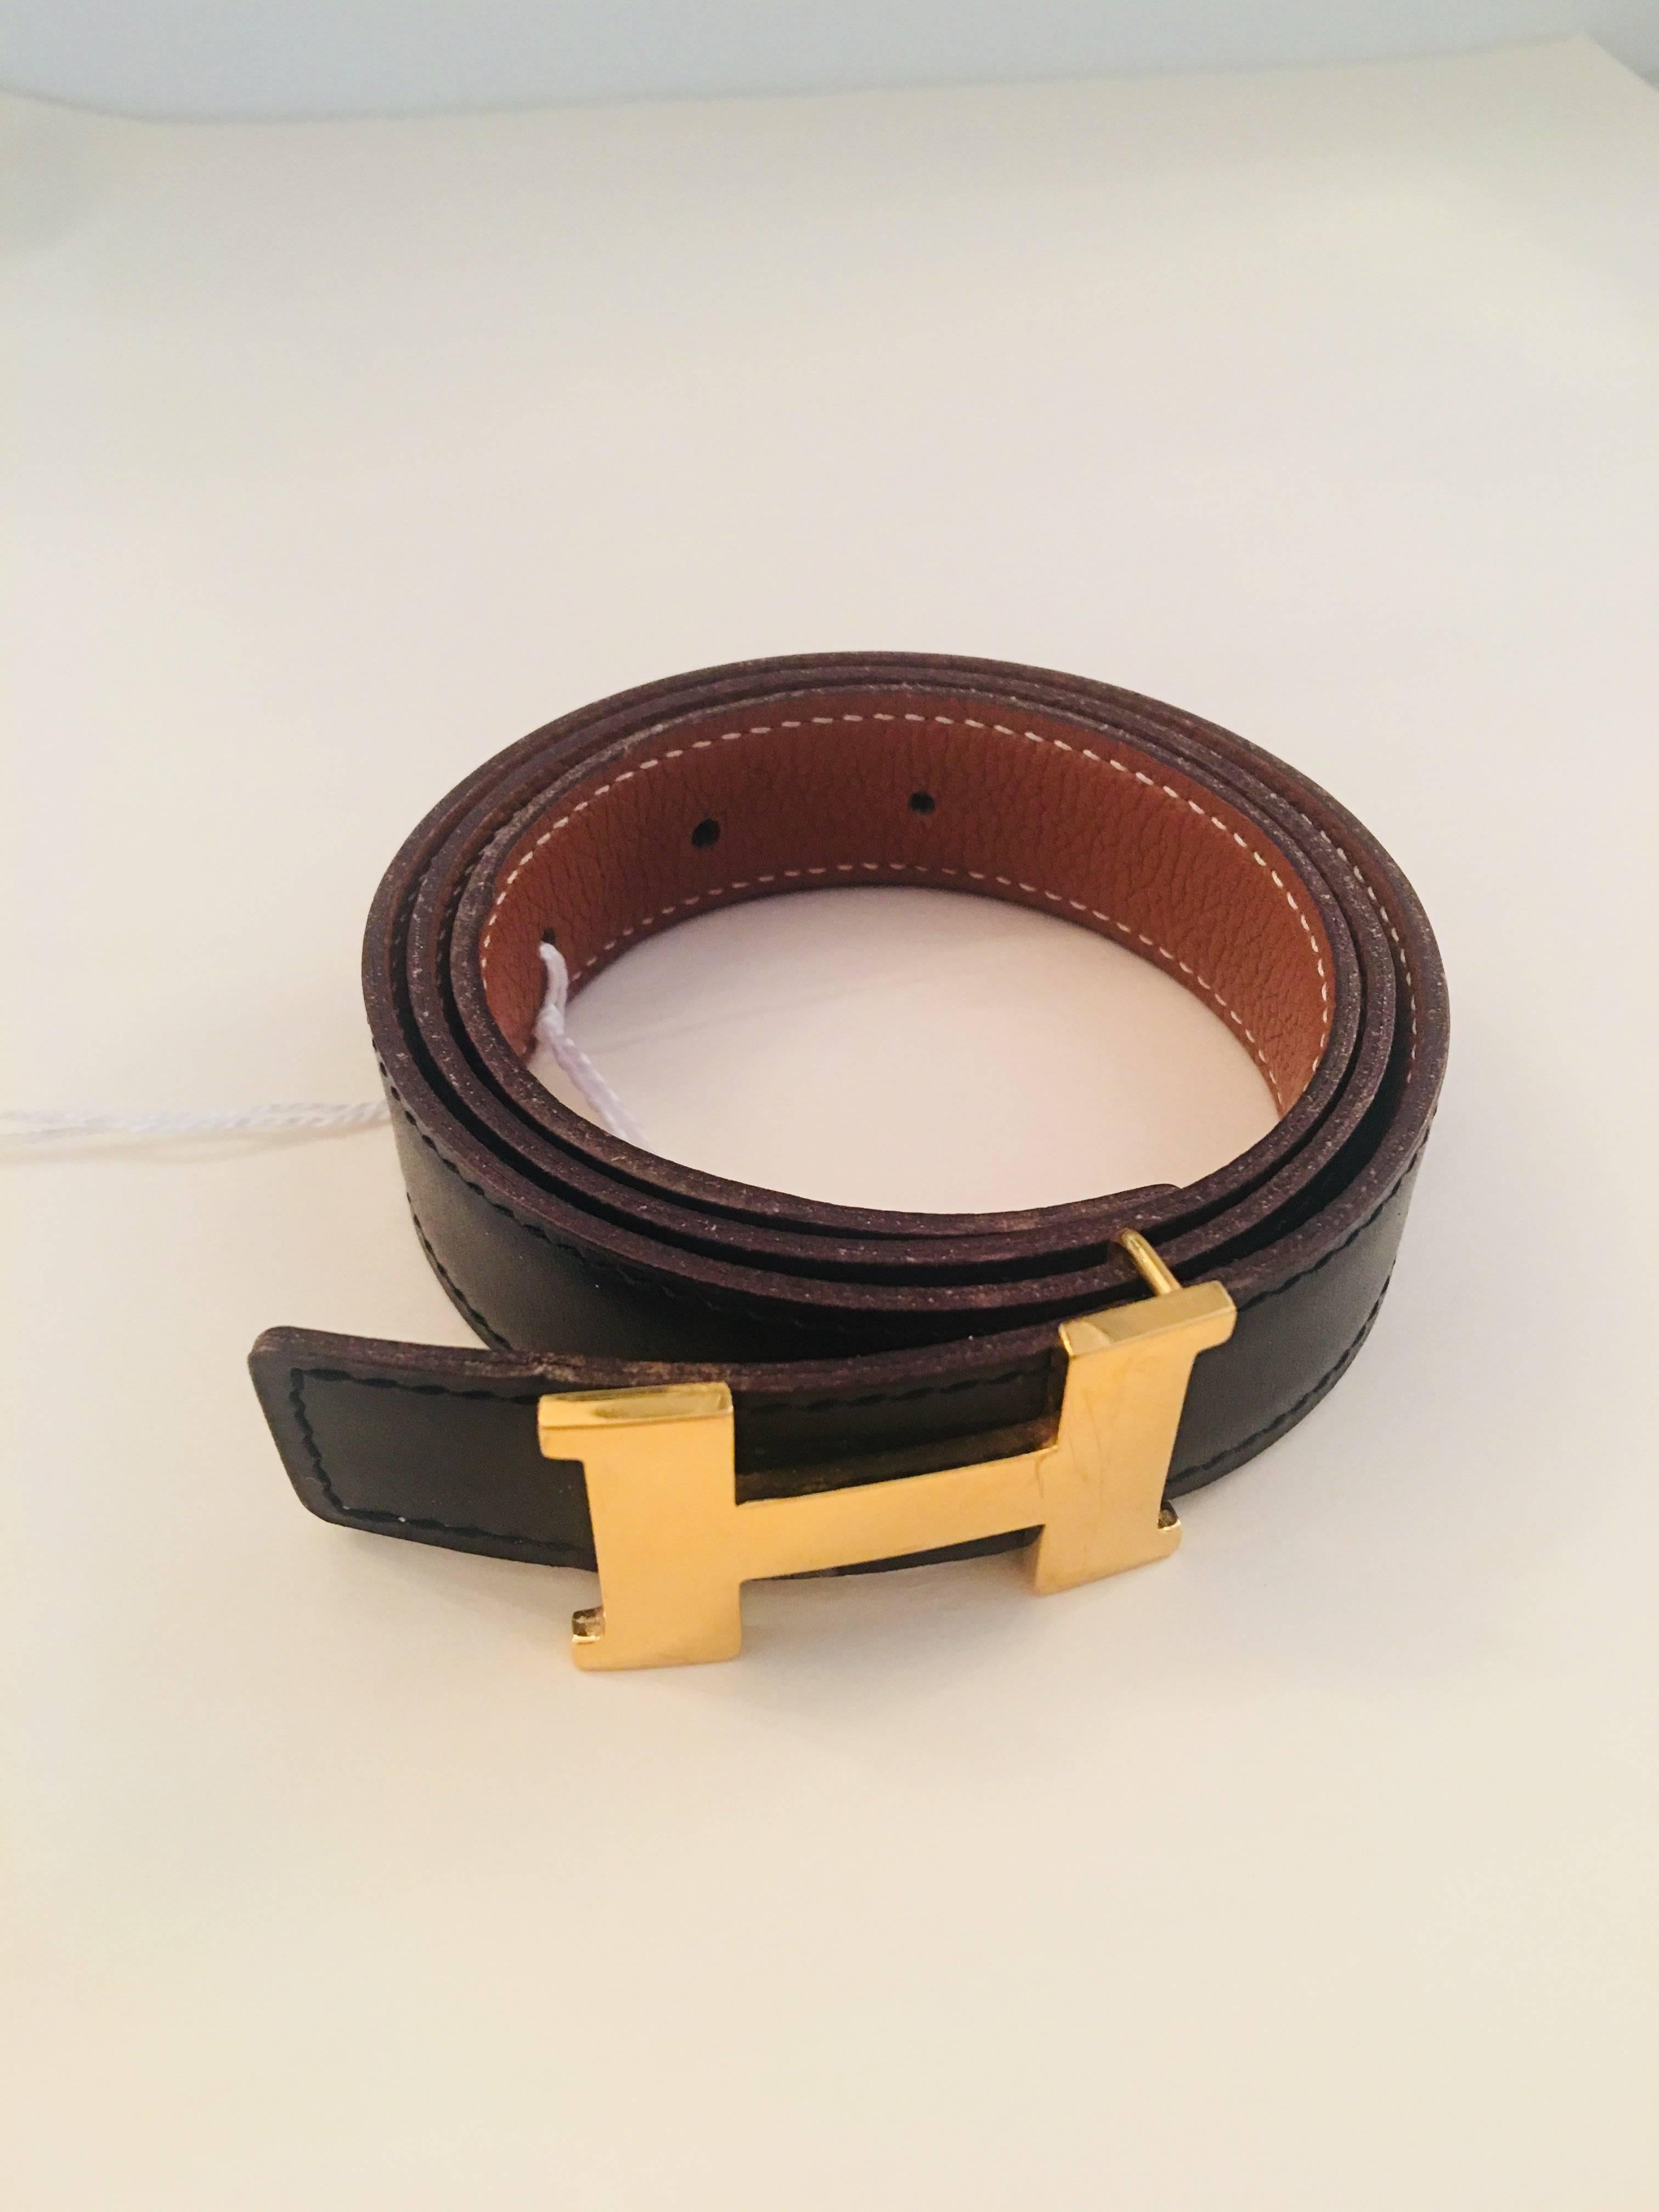 Hermes Reversible Belt- 70cm, Gold Buckle. Dark Brown/ Cognac Leather.